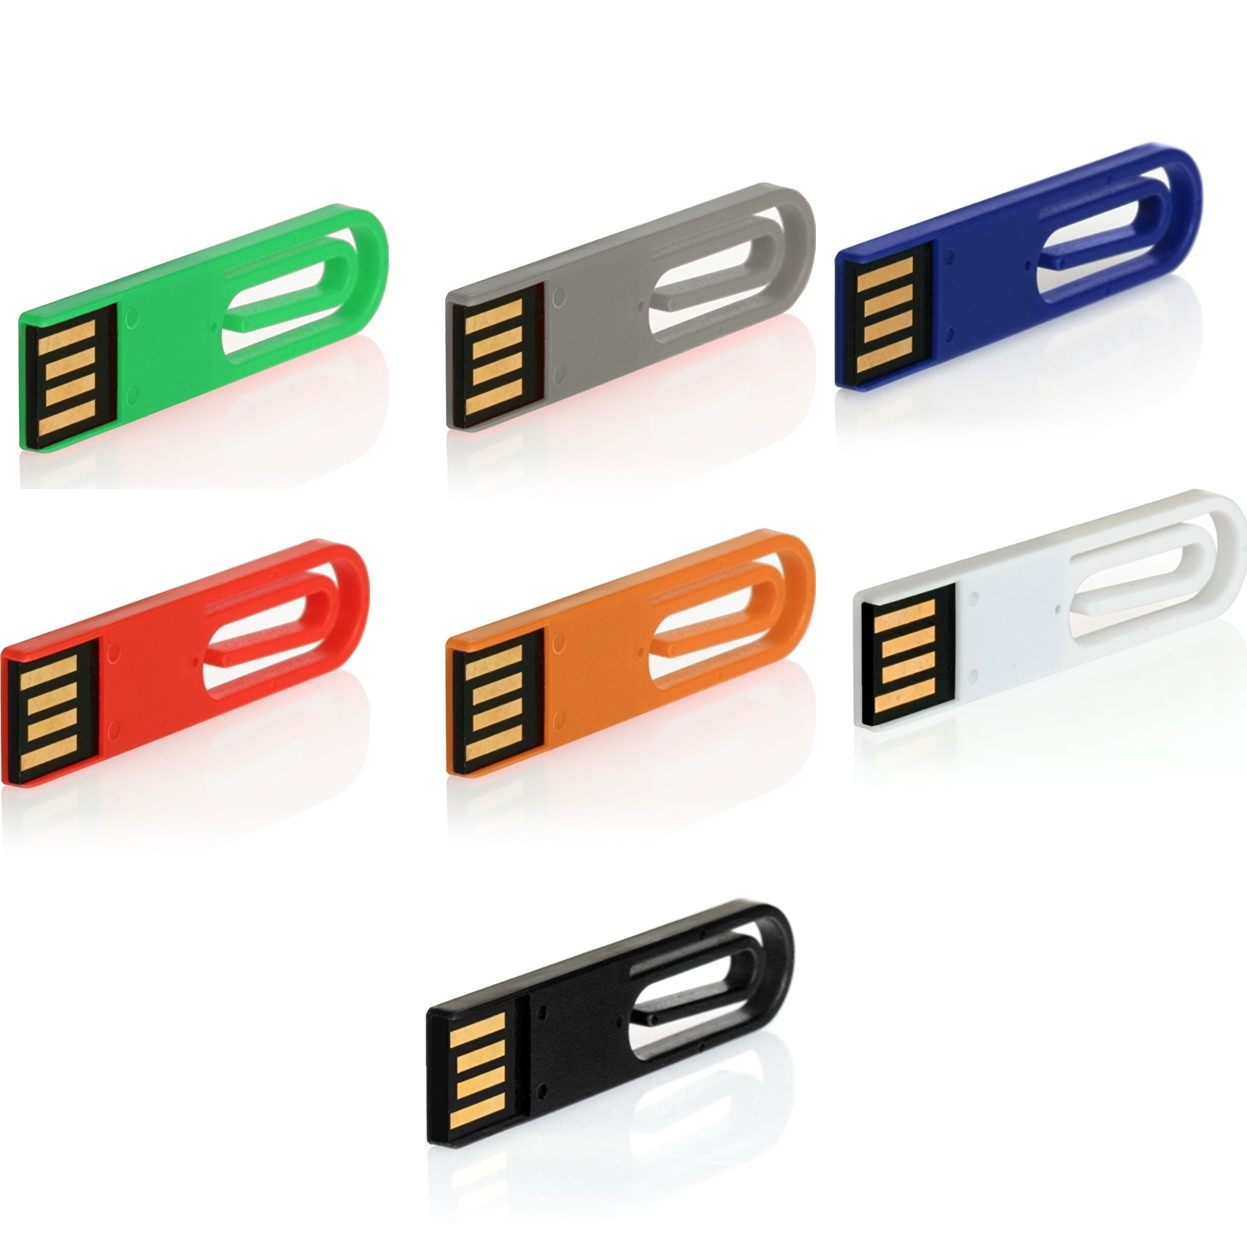 USB GERMANY ® eCLIP USB-Stick (Weiß, 32 GB)